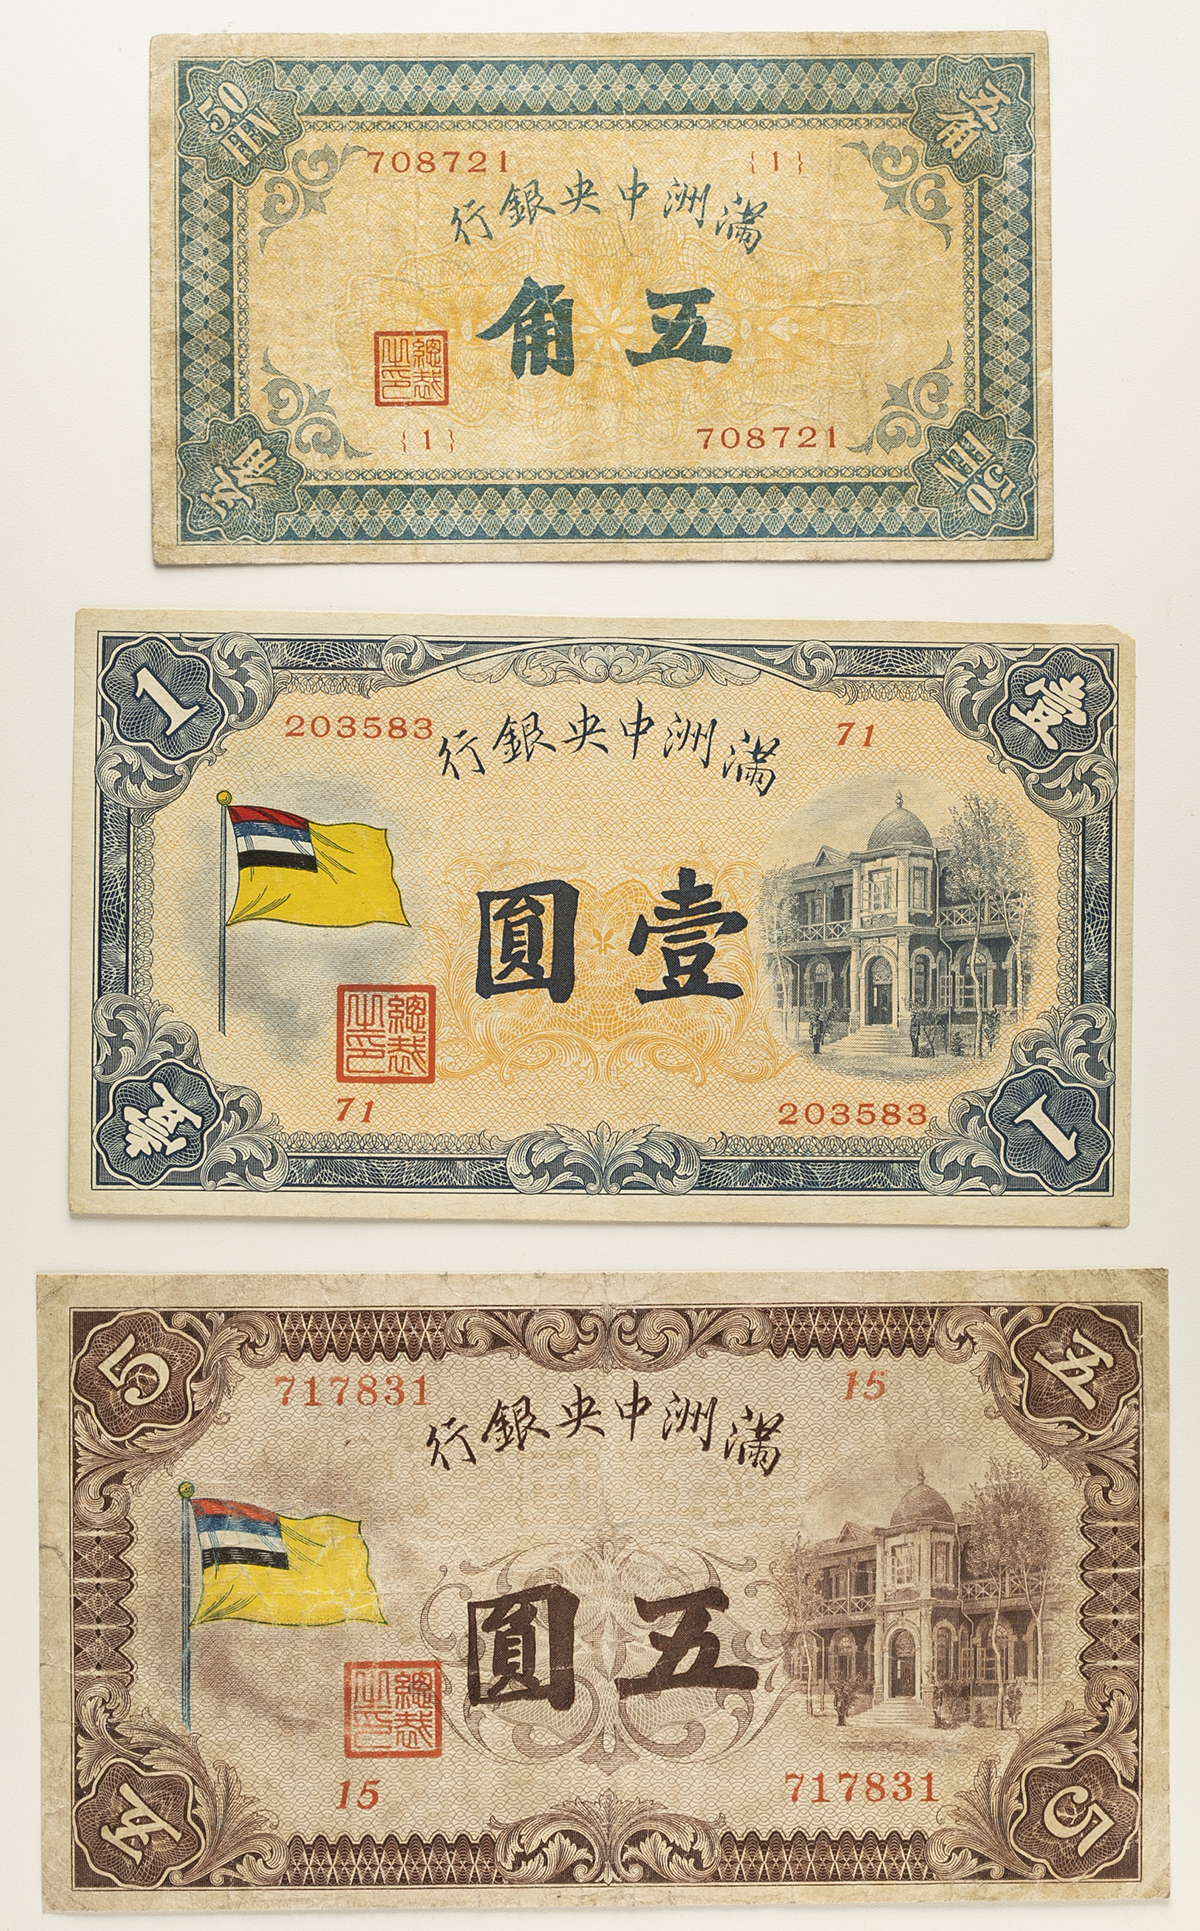 150212H19-0223H□エラー紙幣□満州中央銀行 丁号券5角 大ズレ印刷 